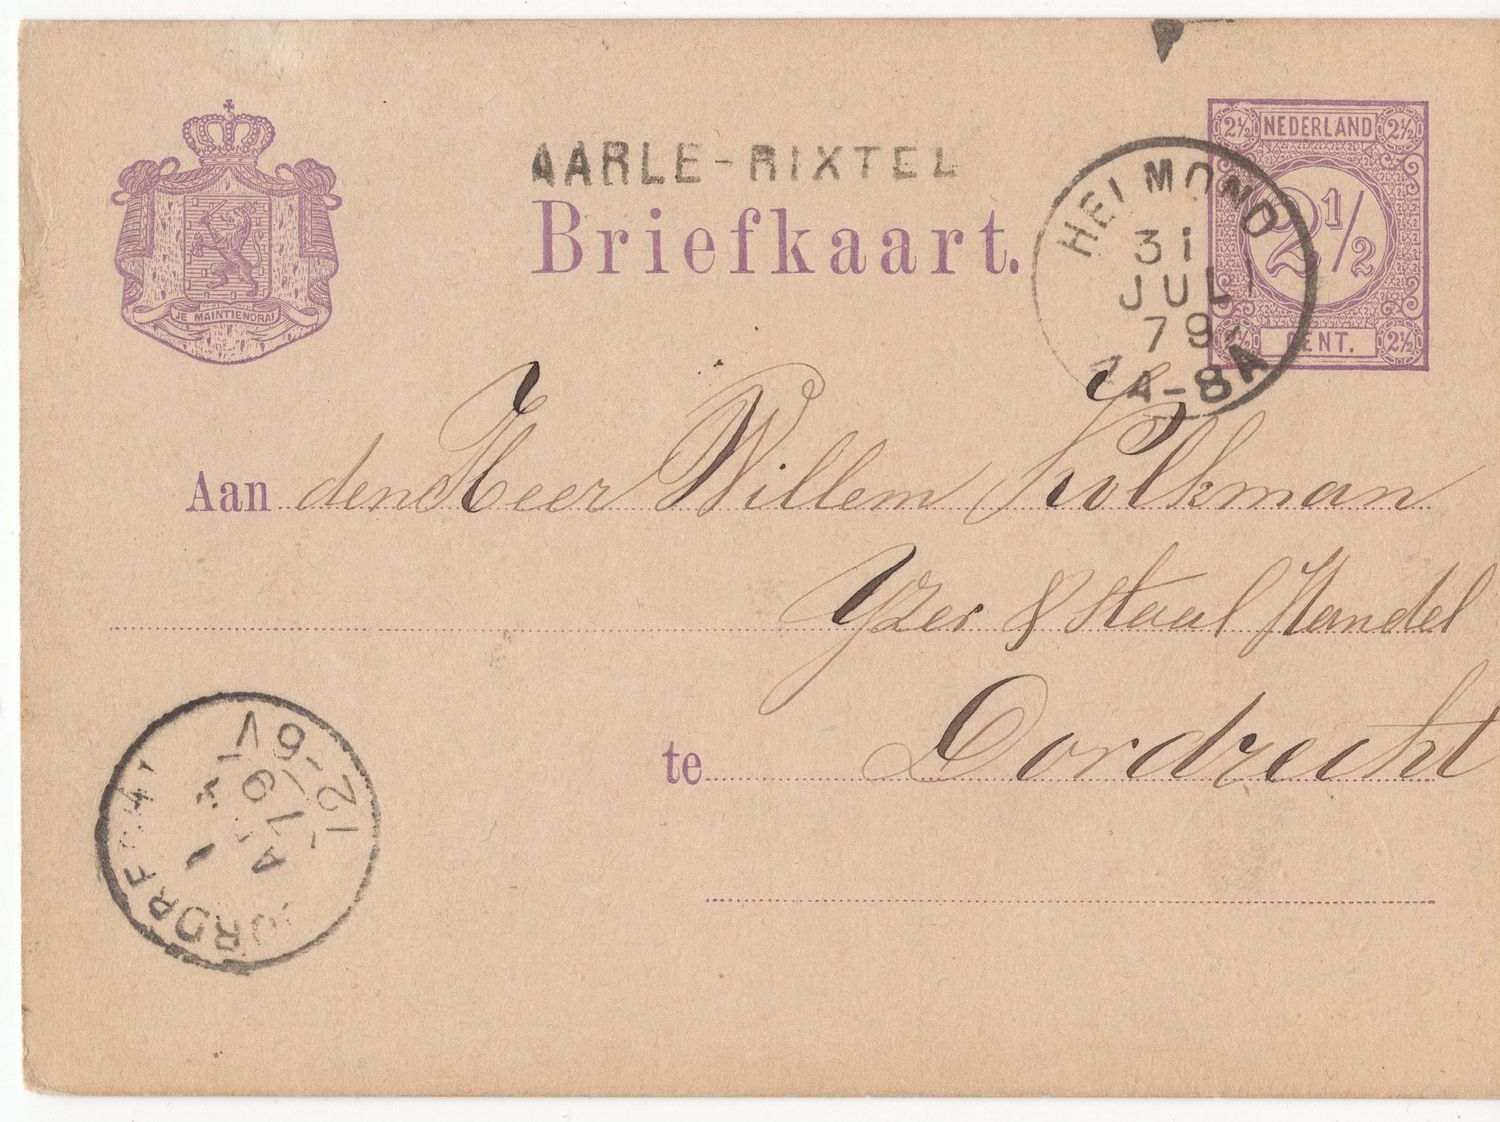 Aarle-Rixtel en 2-letter Helmond op briefkaart